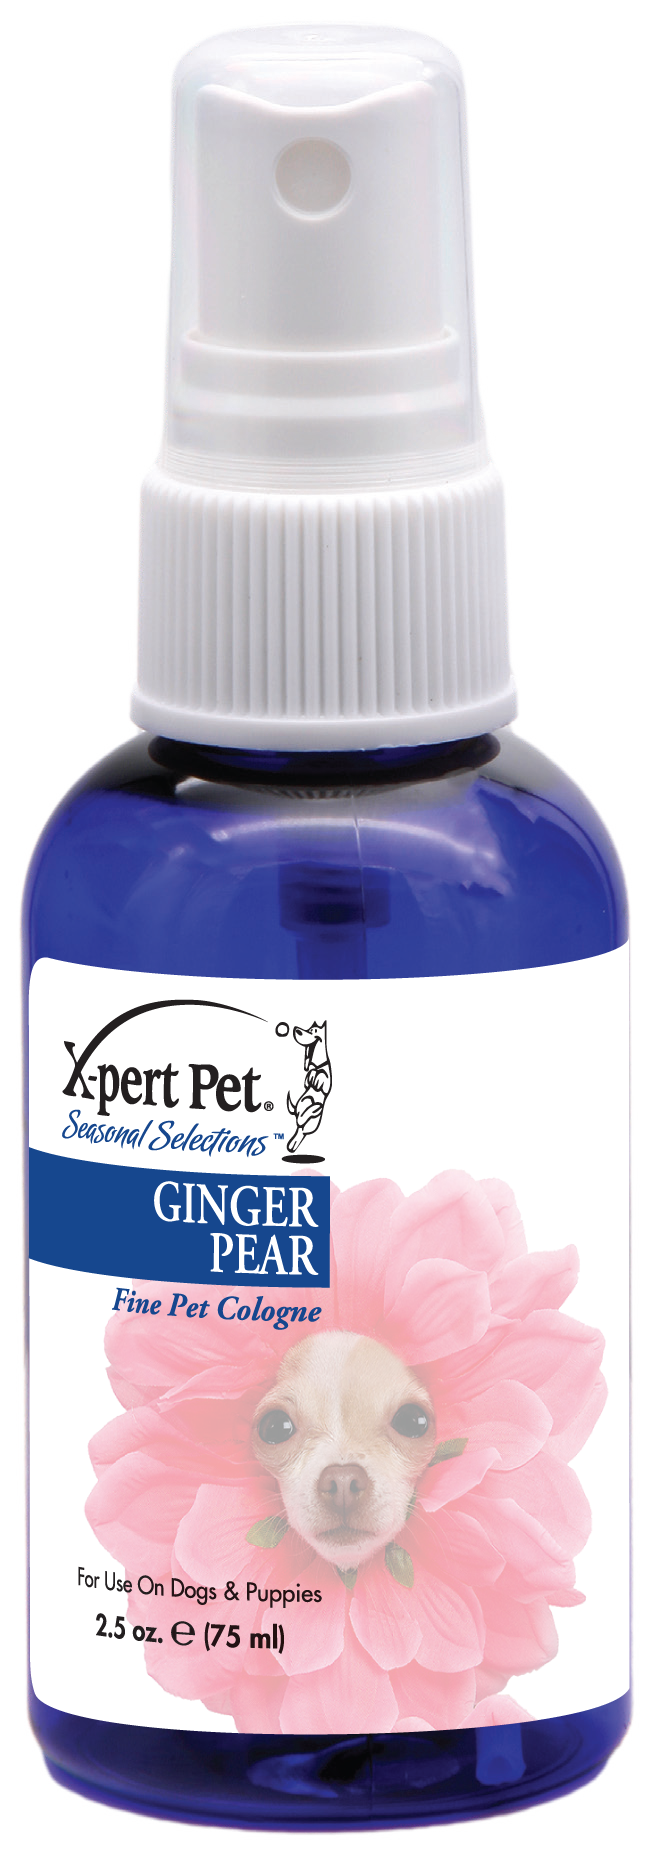 Ginger Pear Pet Cologne